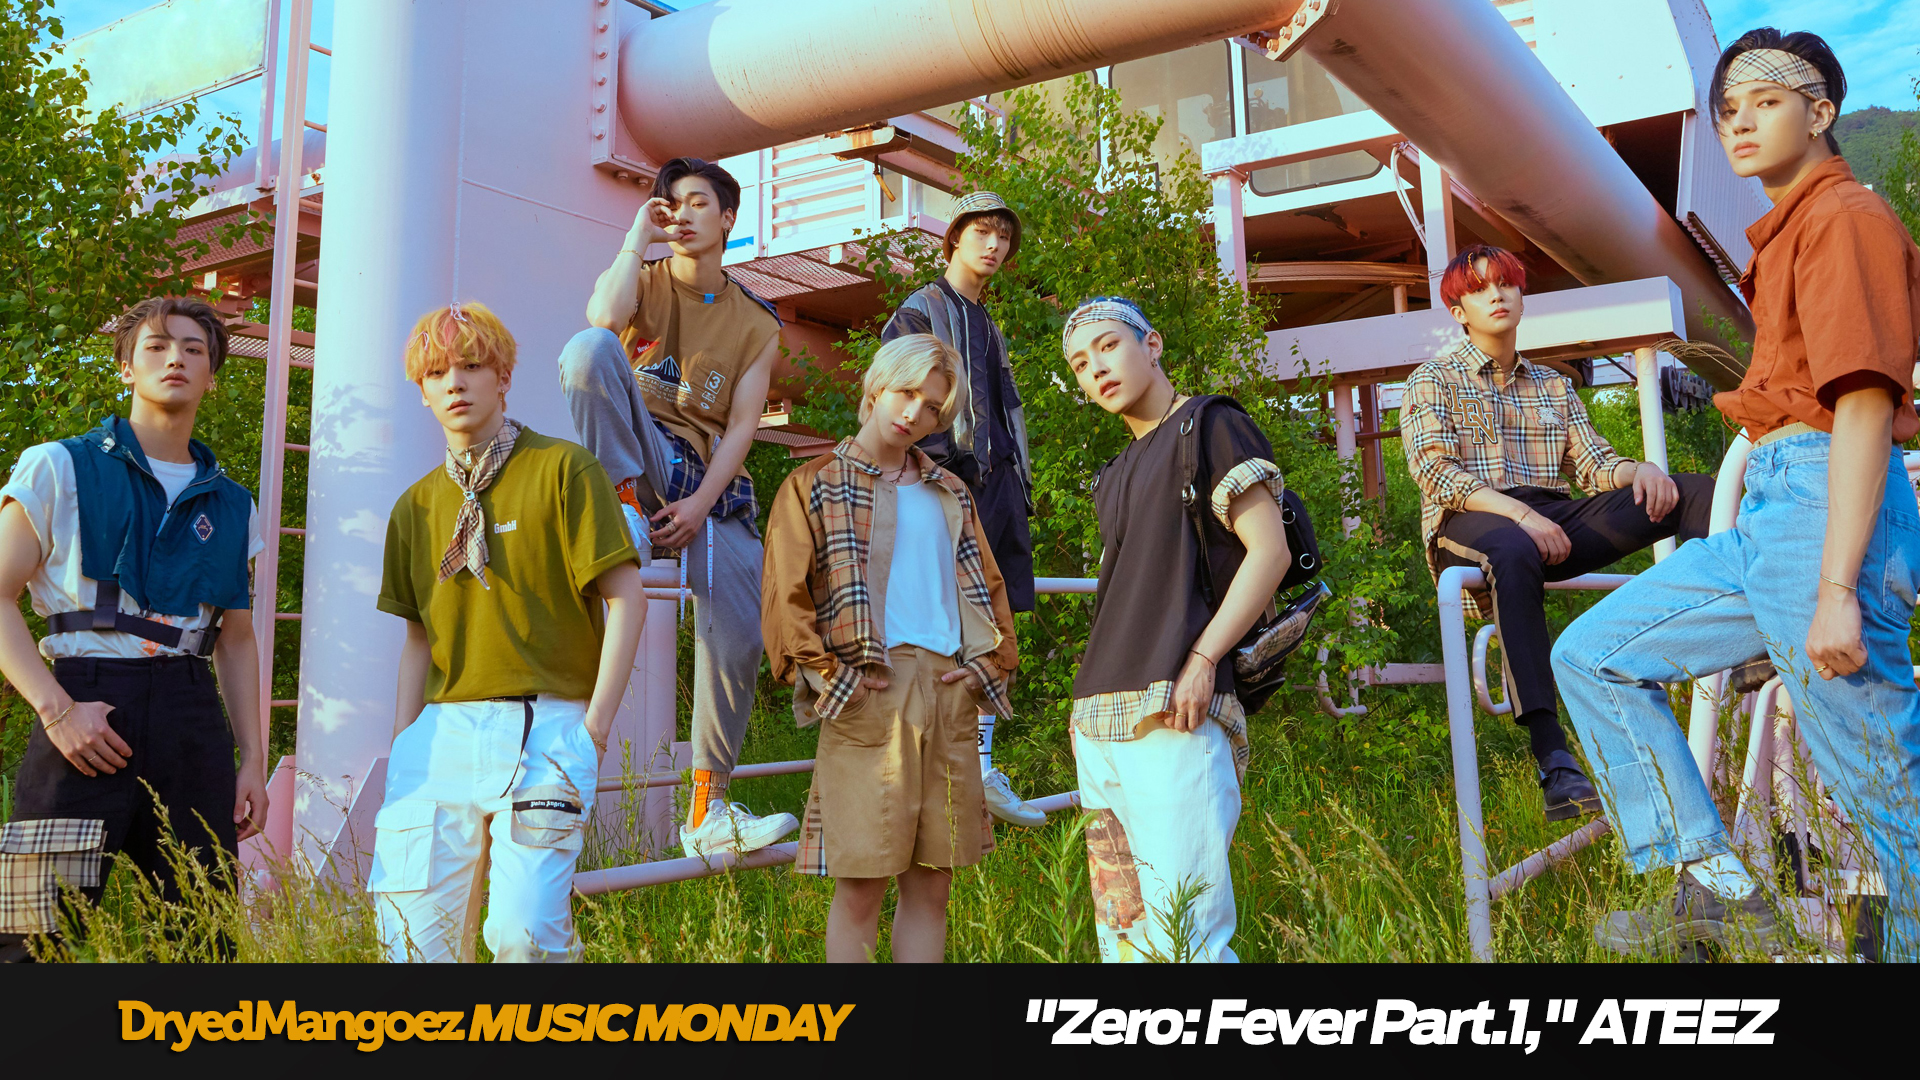 Music Monday August 10, 2020 – “Zero: Fever Part.1,” ATEEZ